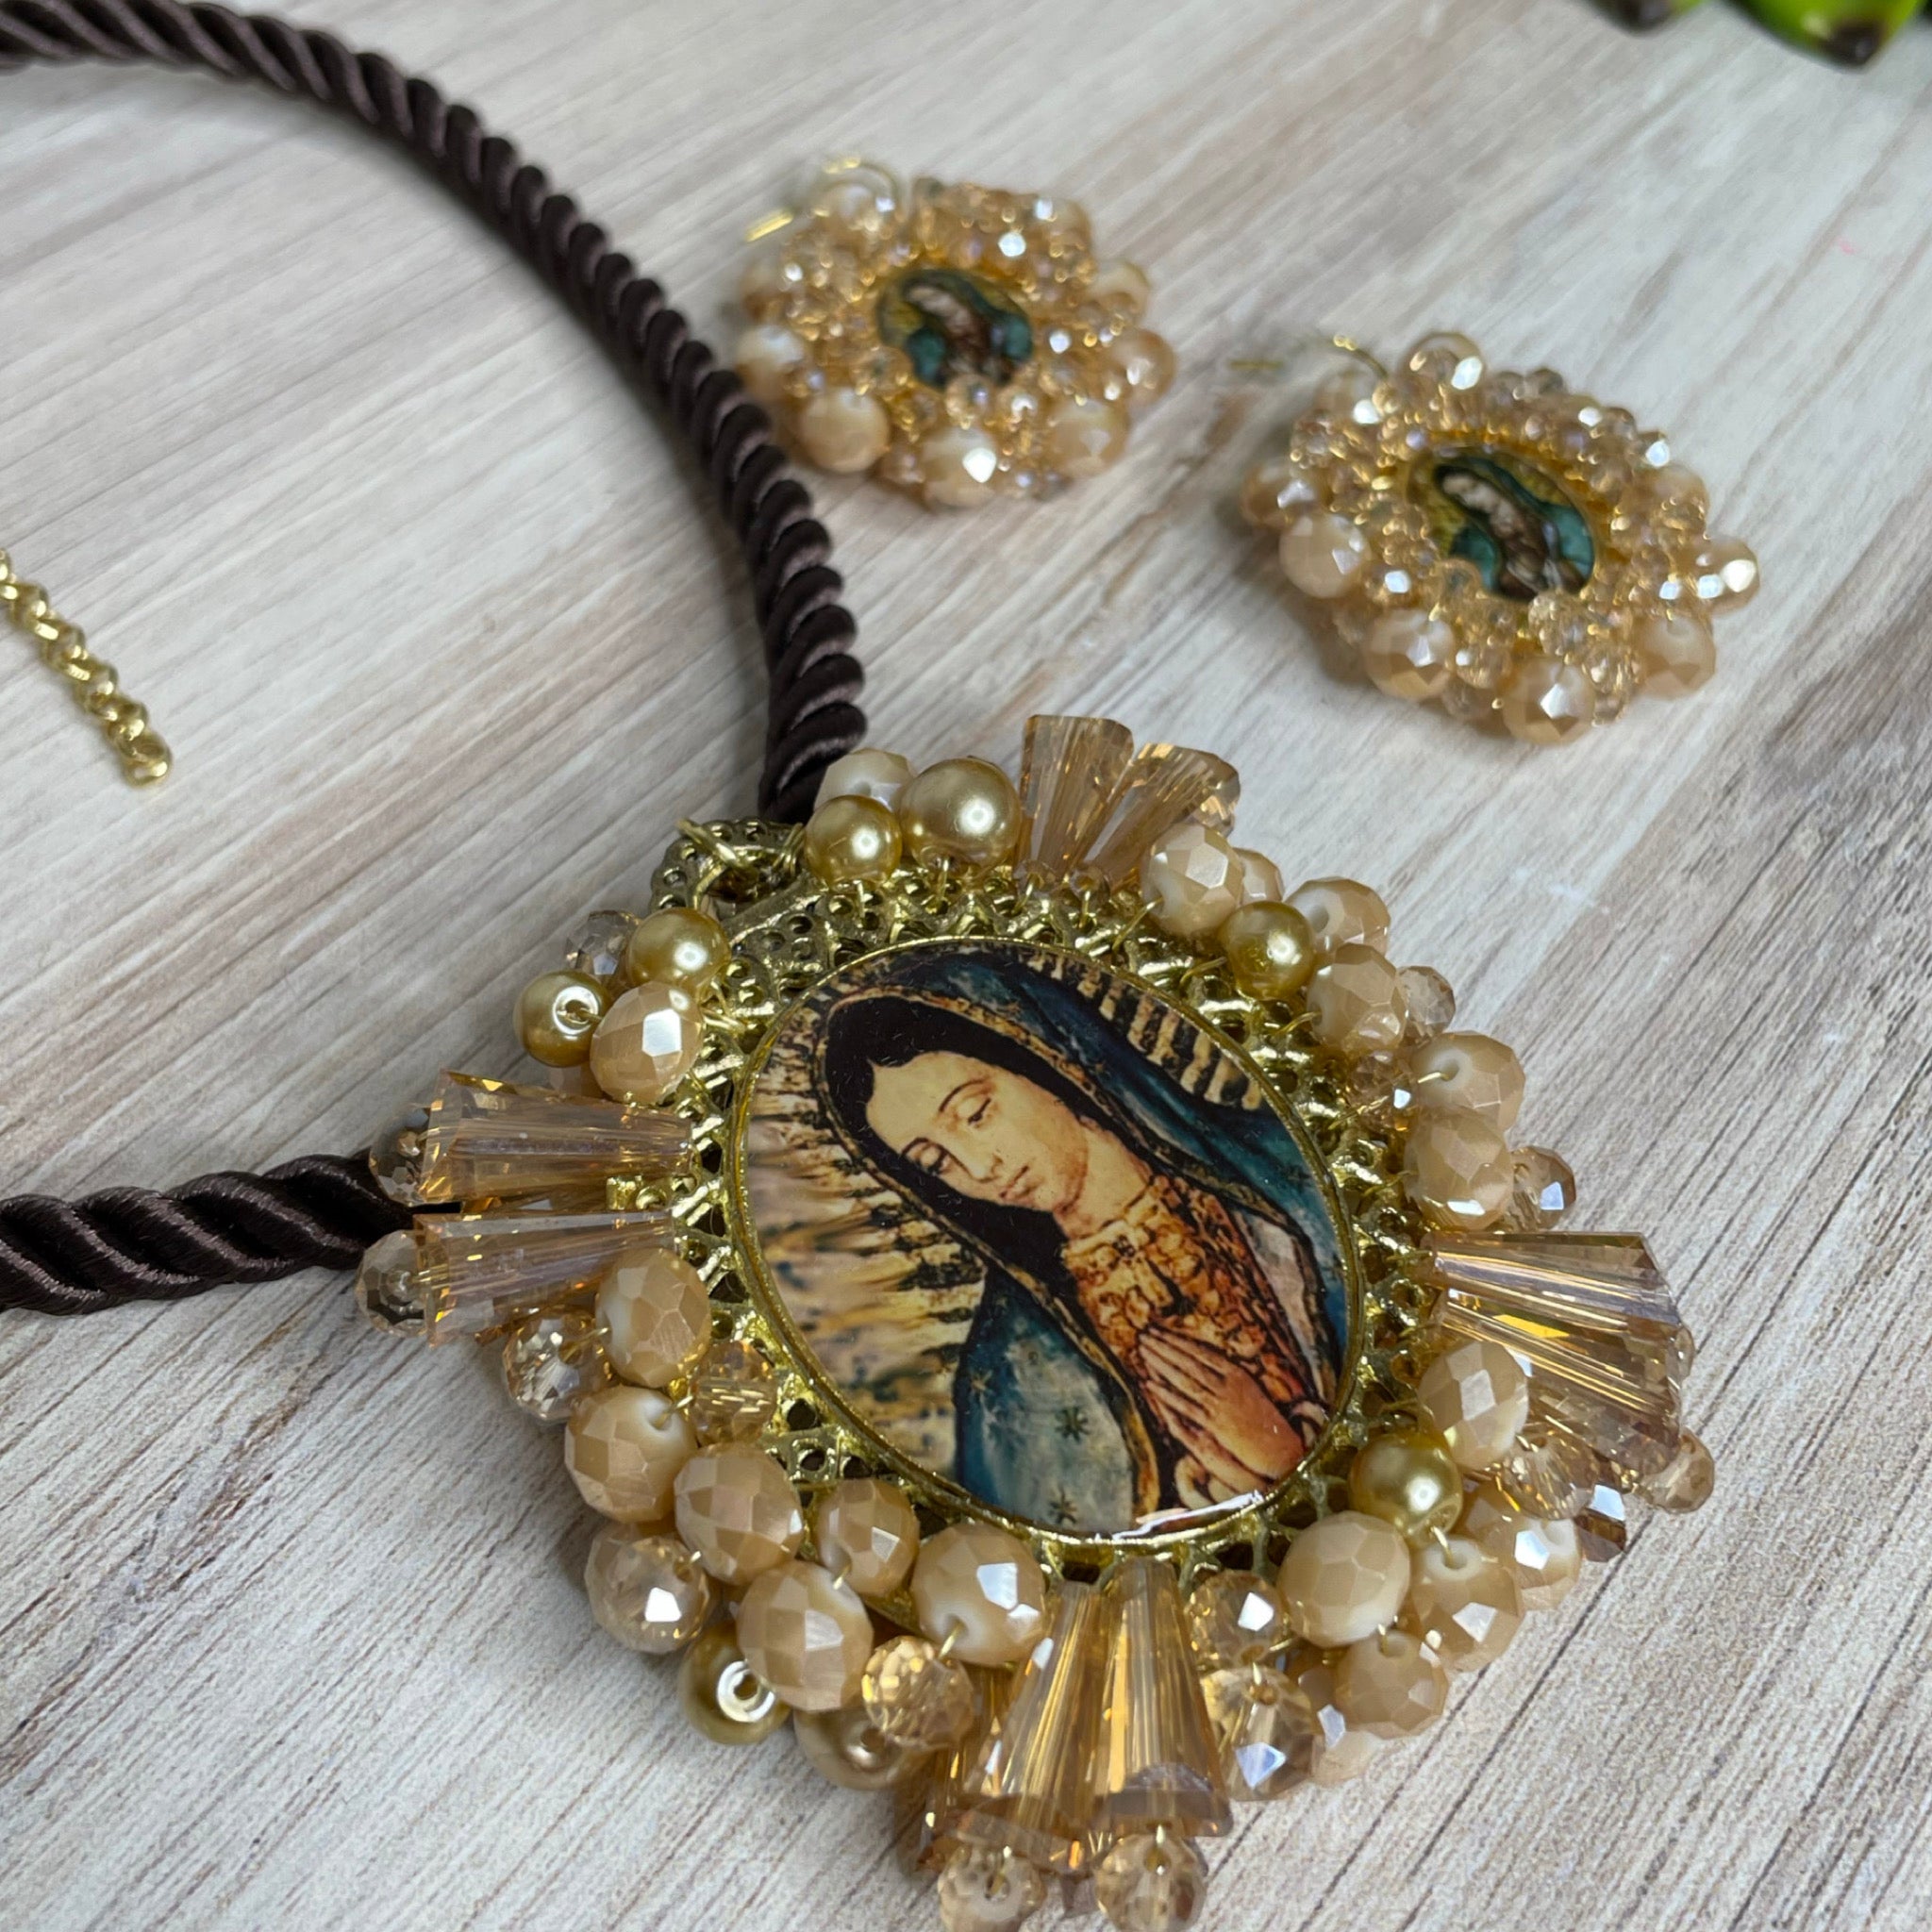 The Inspirational Origins of the Virgencita Necklace